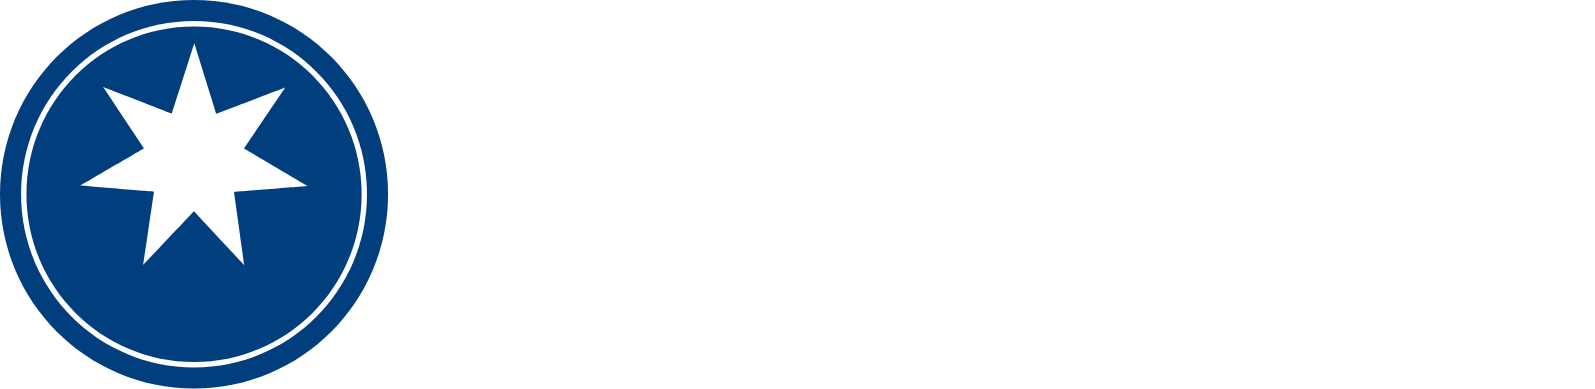 Magellan Financial Group logo large for dark backgrounds (transparent PNG)